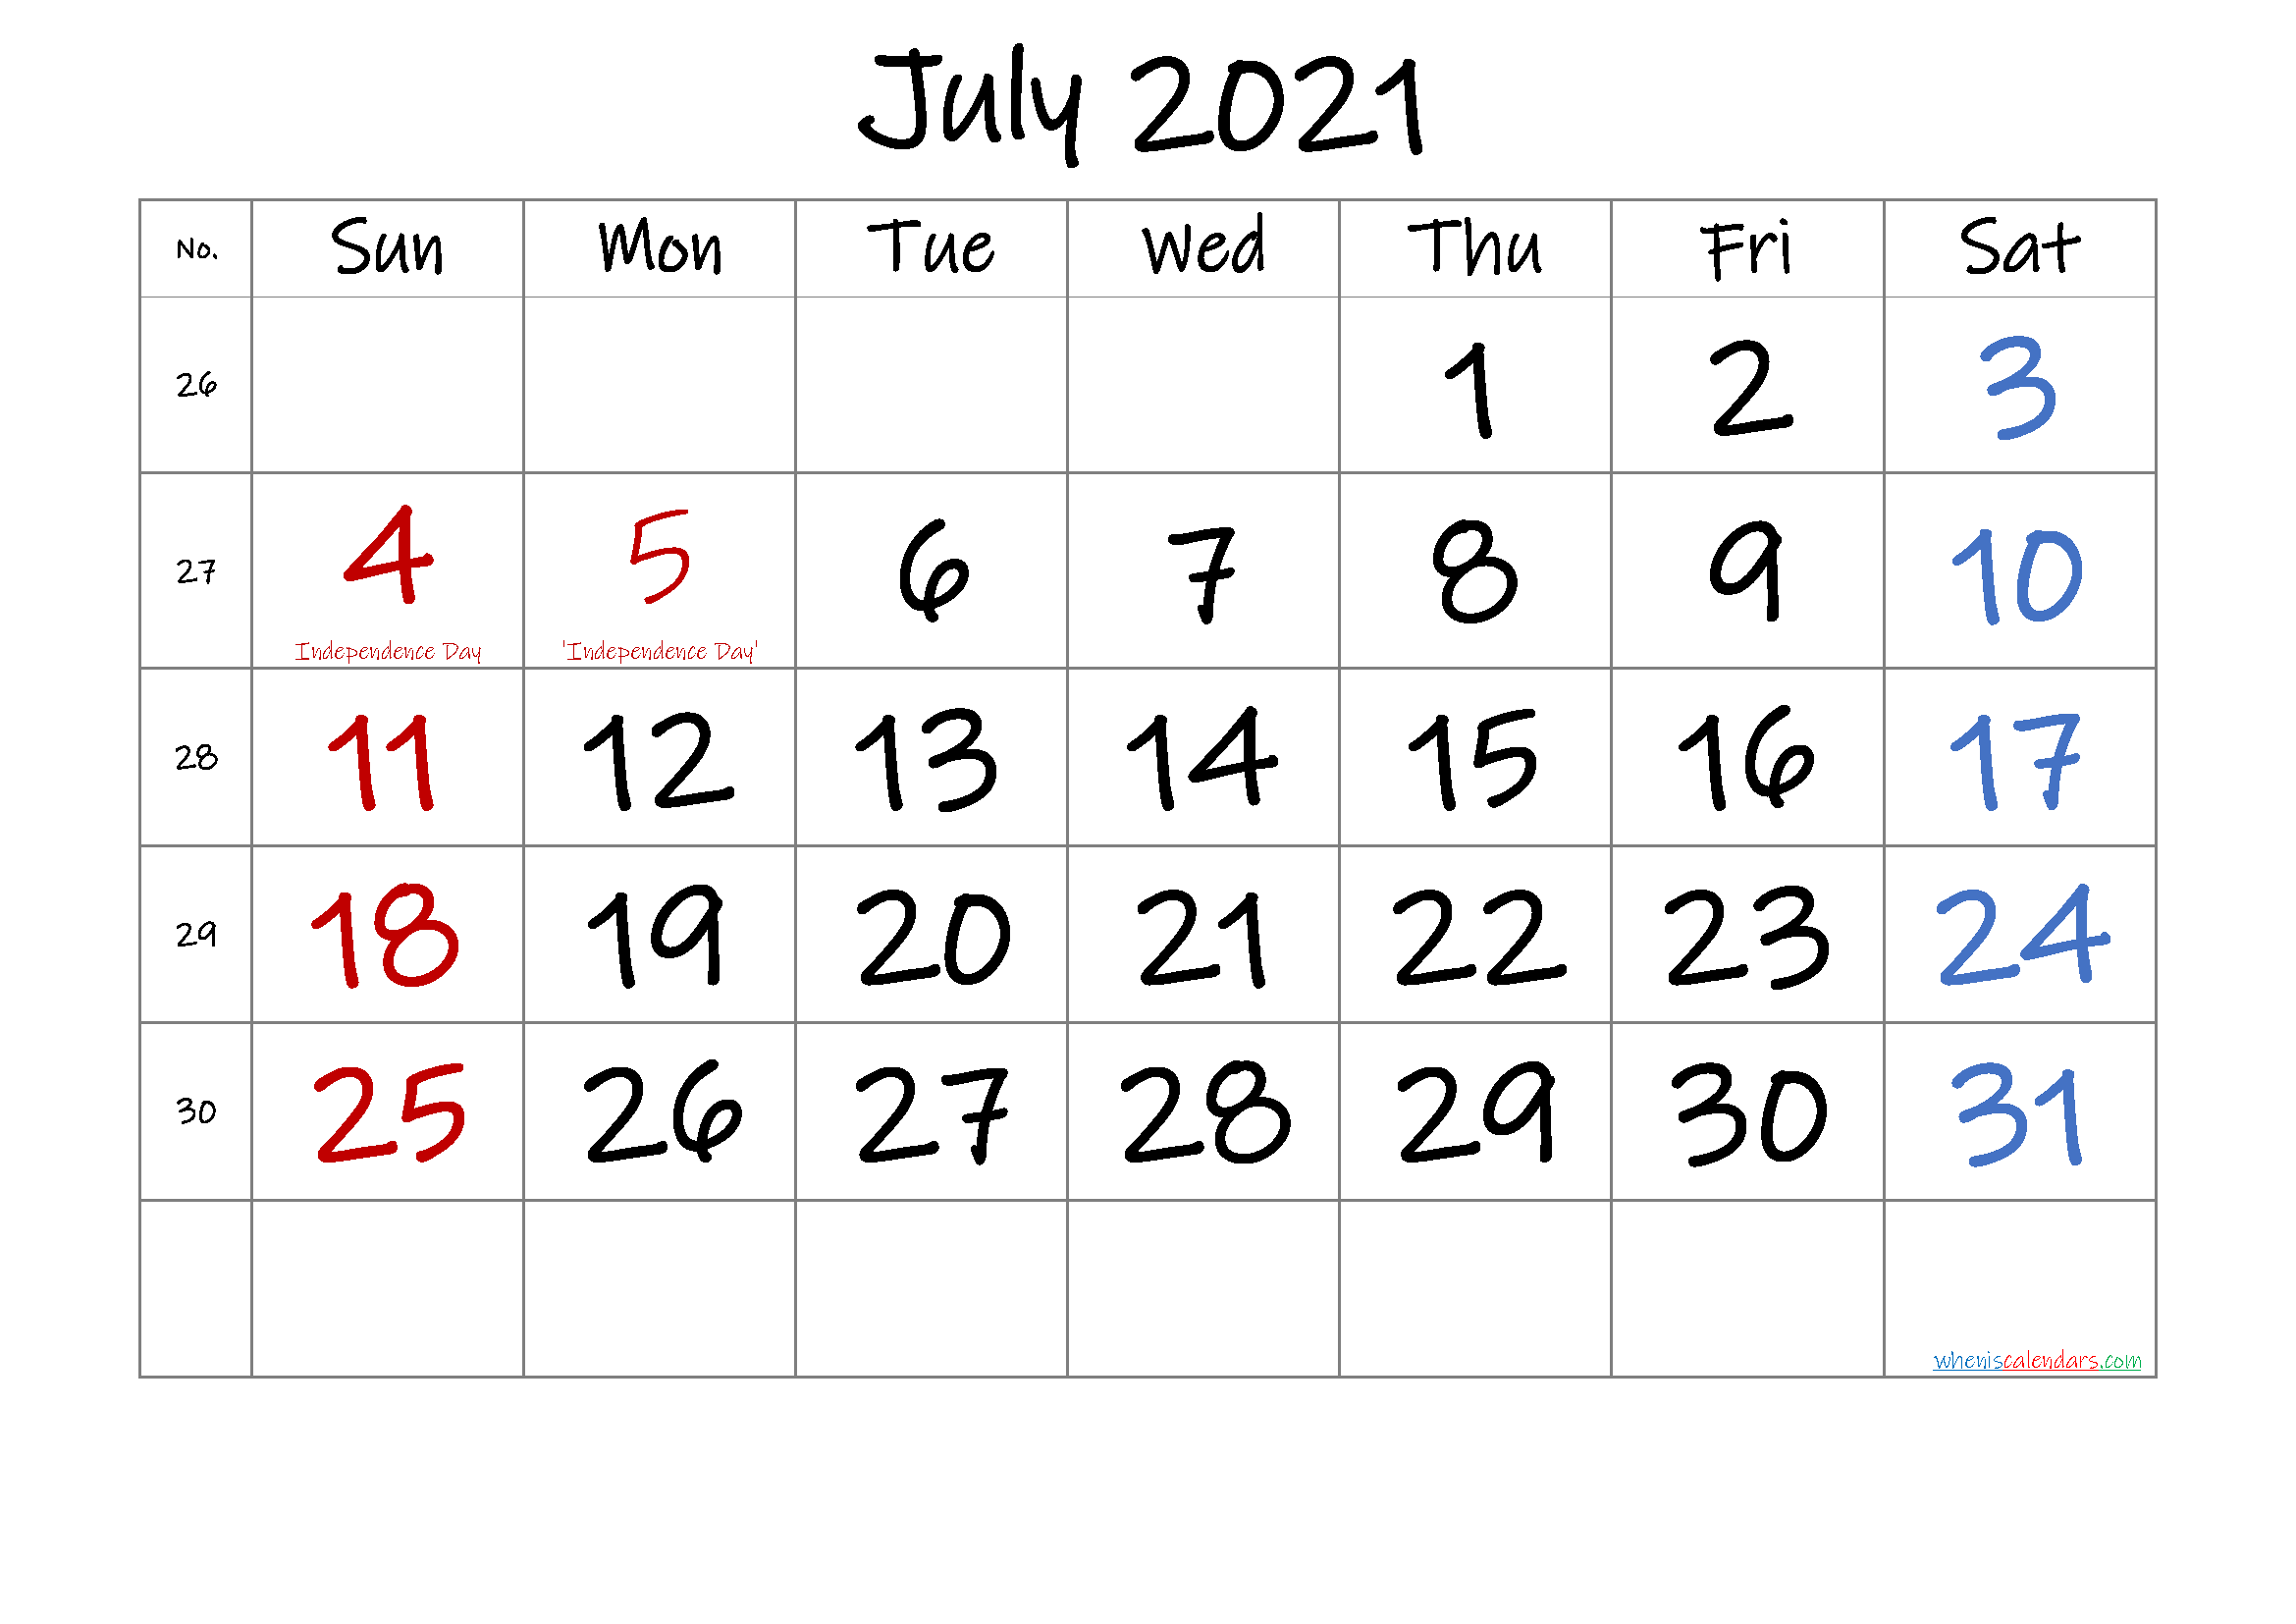 JULY 2021 Printable Calendar with Holidays